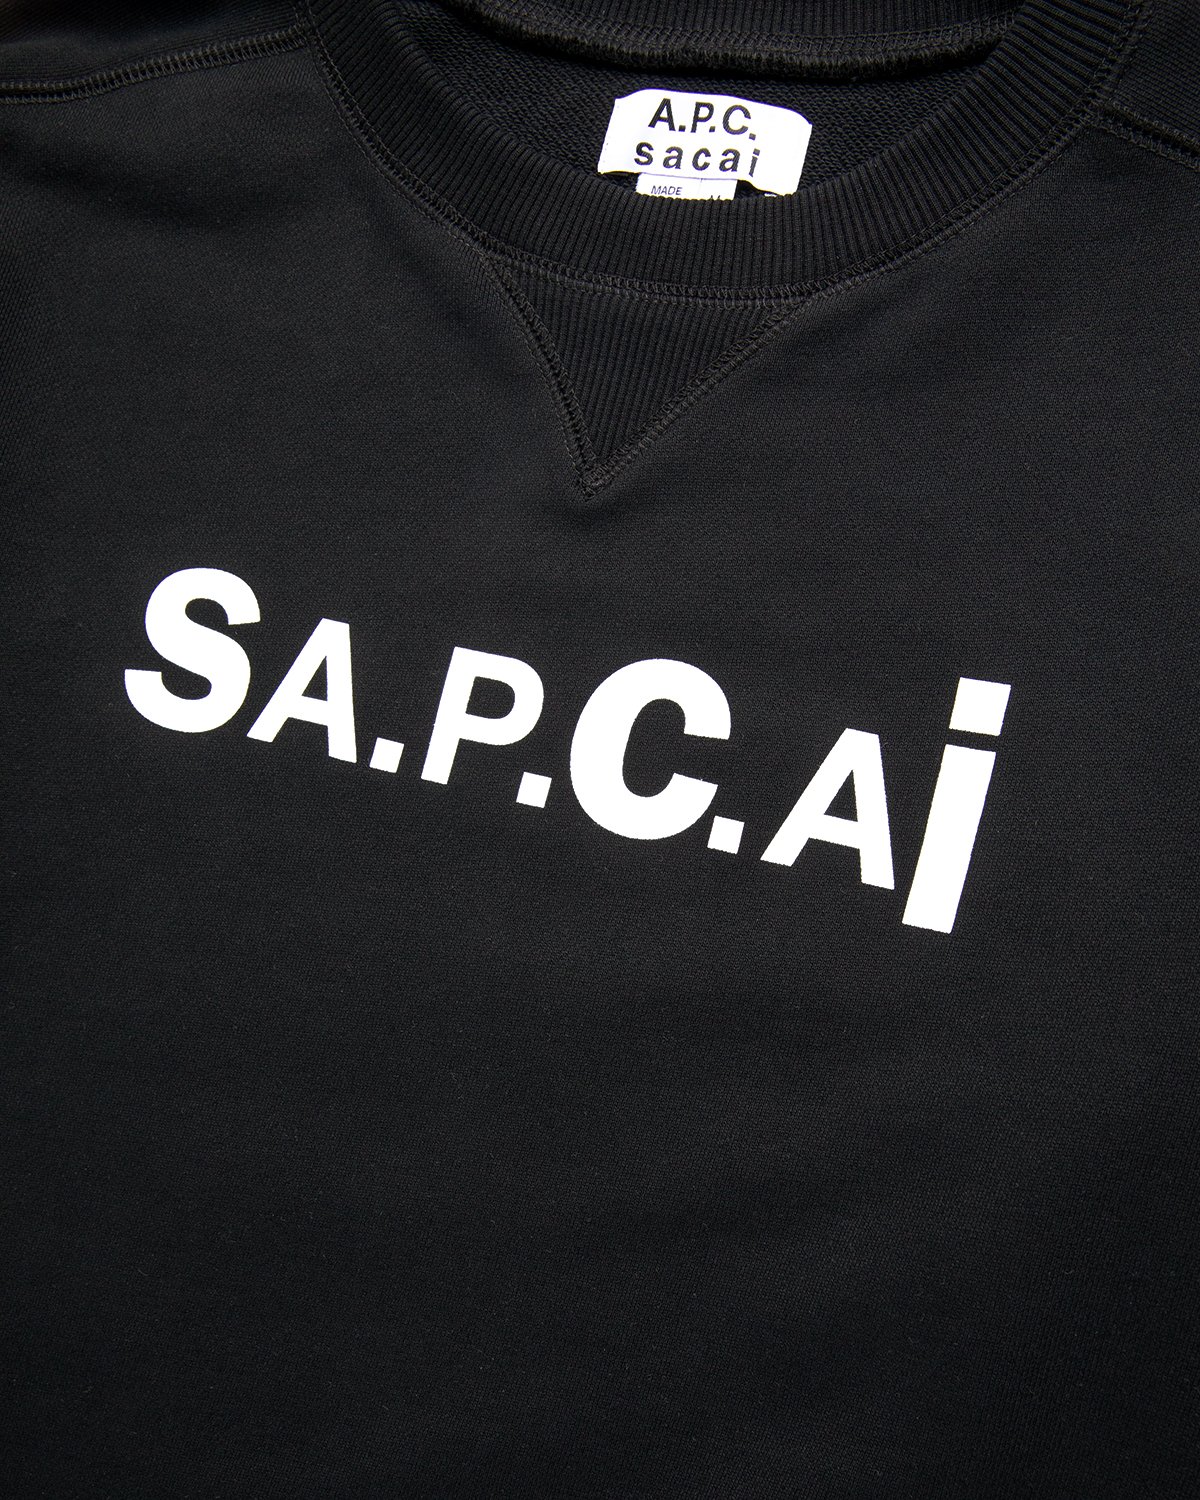 A.P.C. x Sacai - Tani Sweater Black - Clothing - Black - Image 4